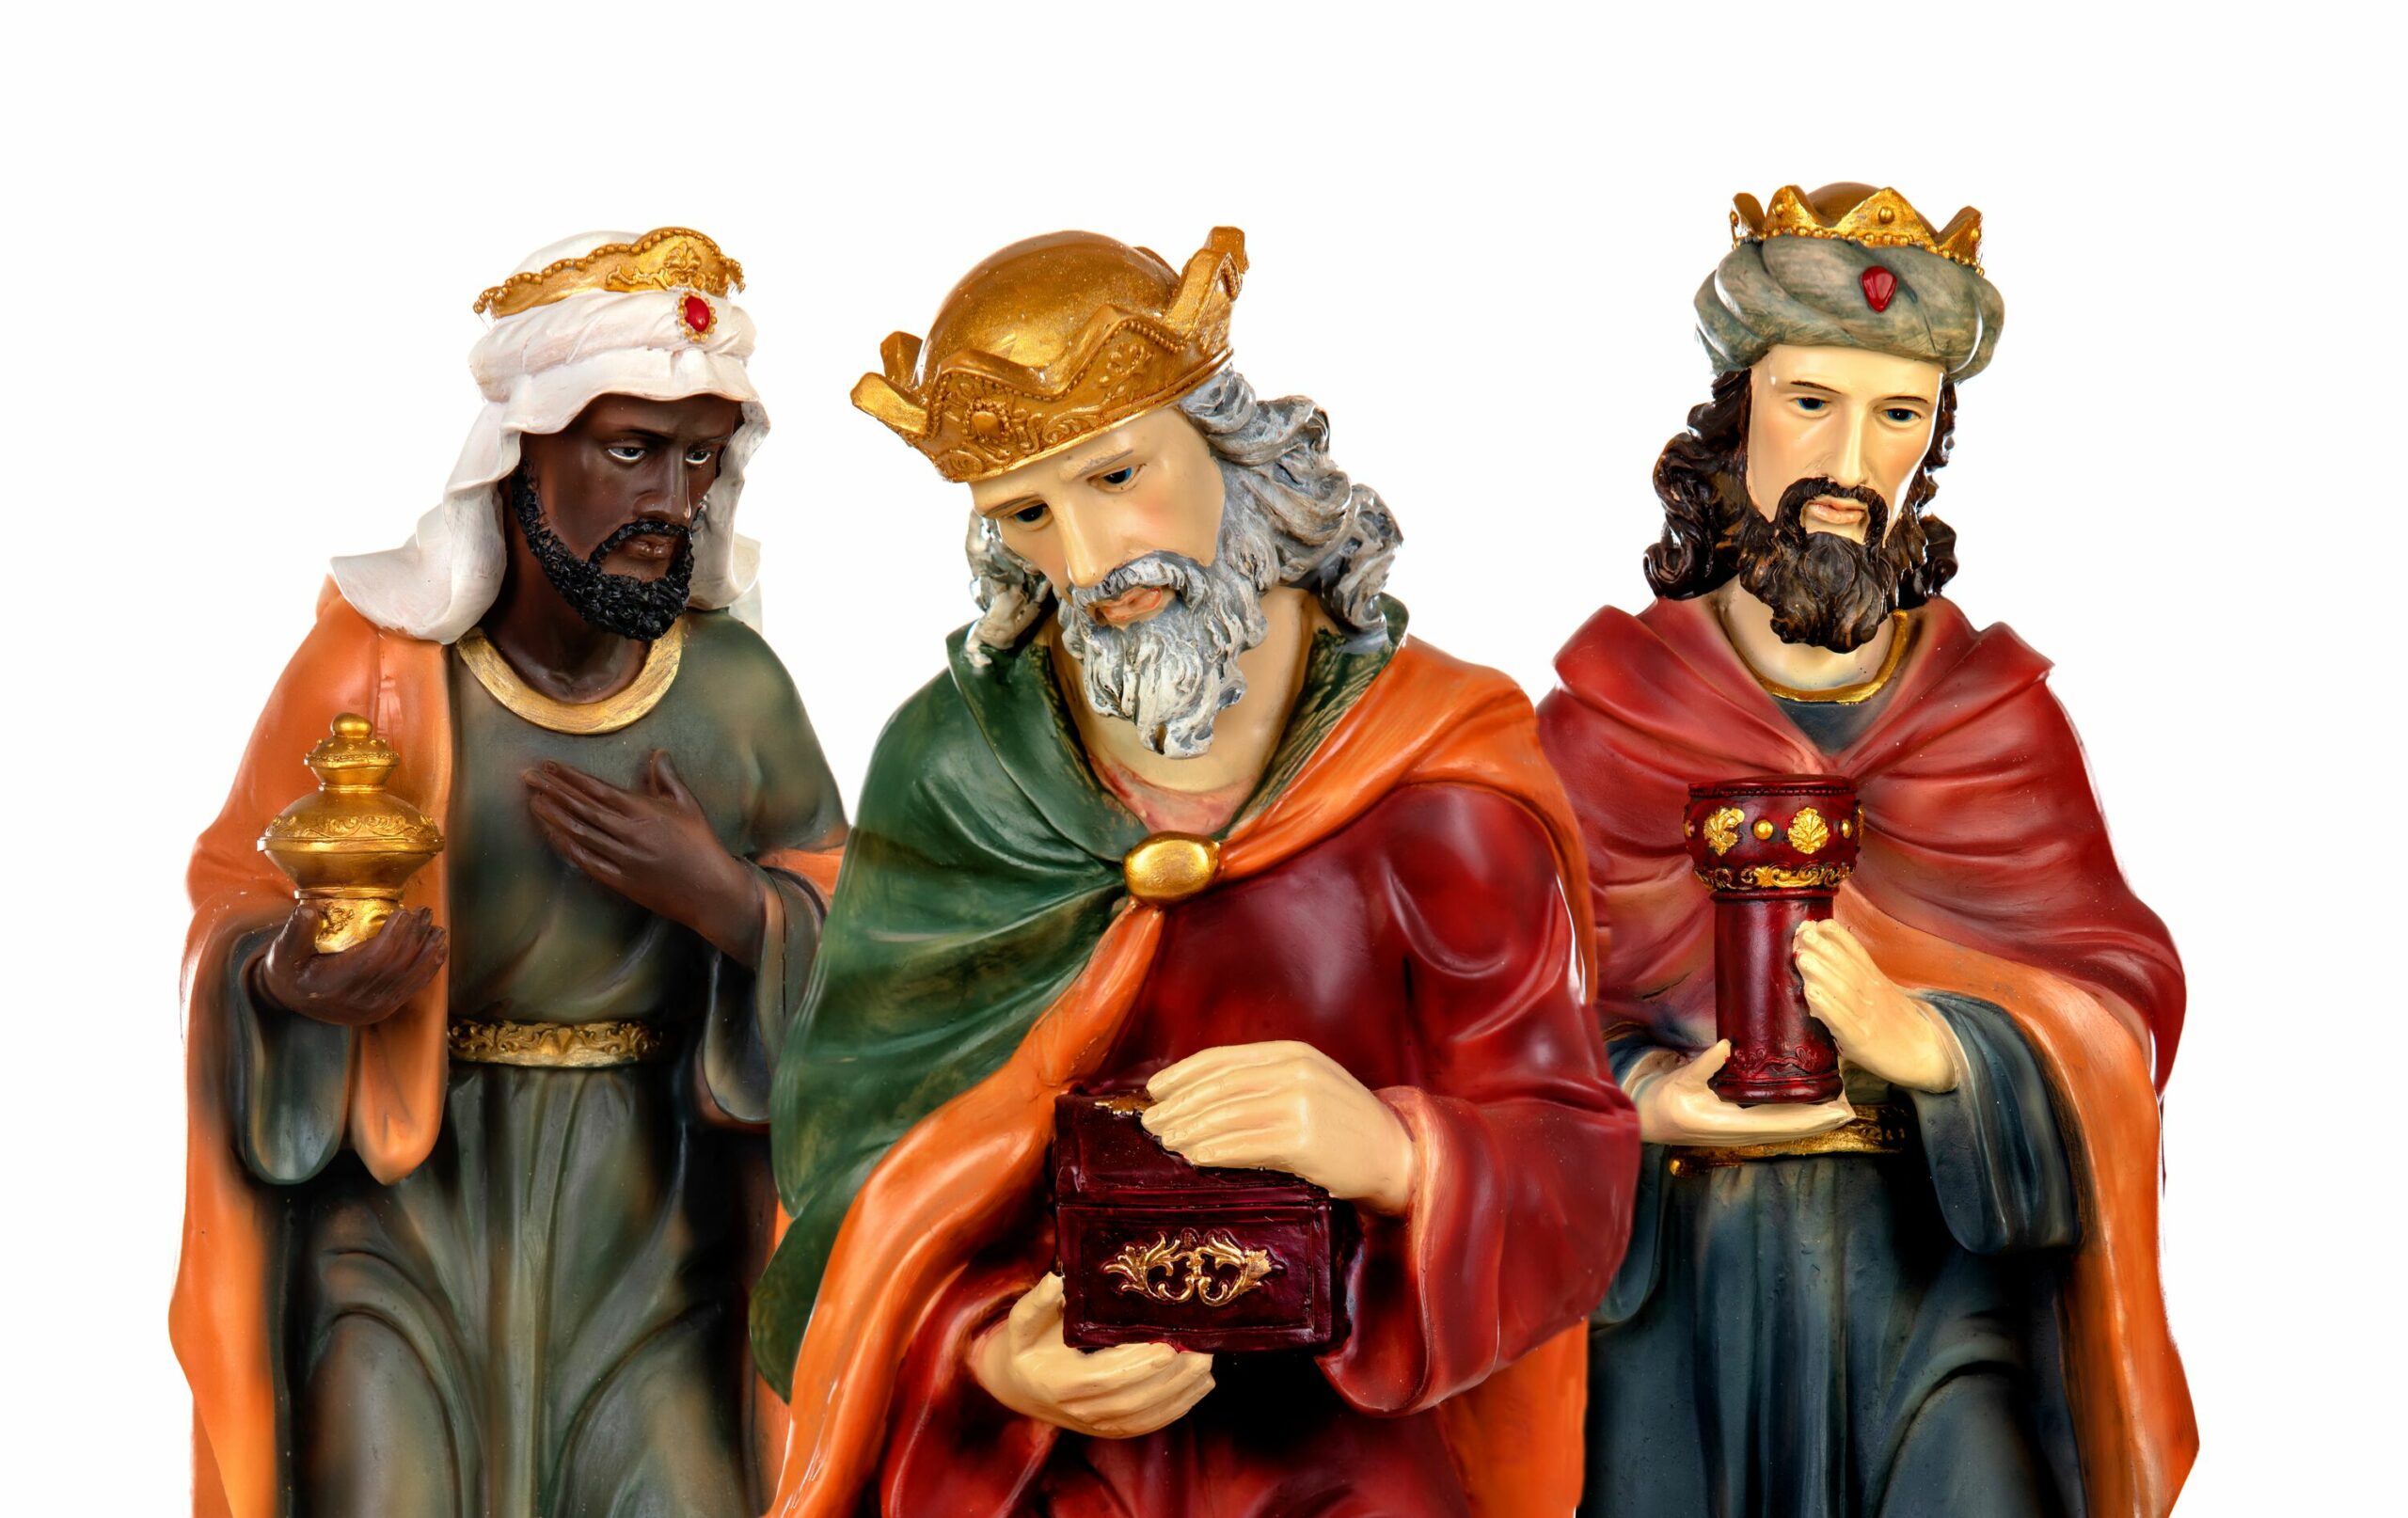 Die heiligen drei Könige als Krippenfiguren